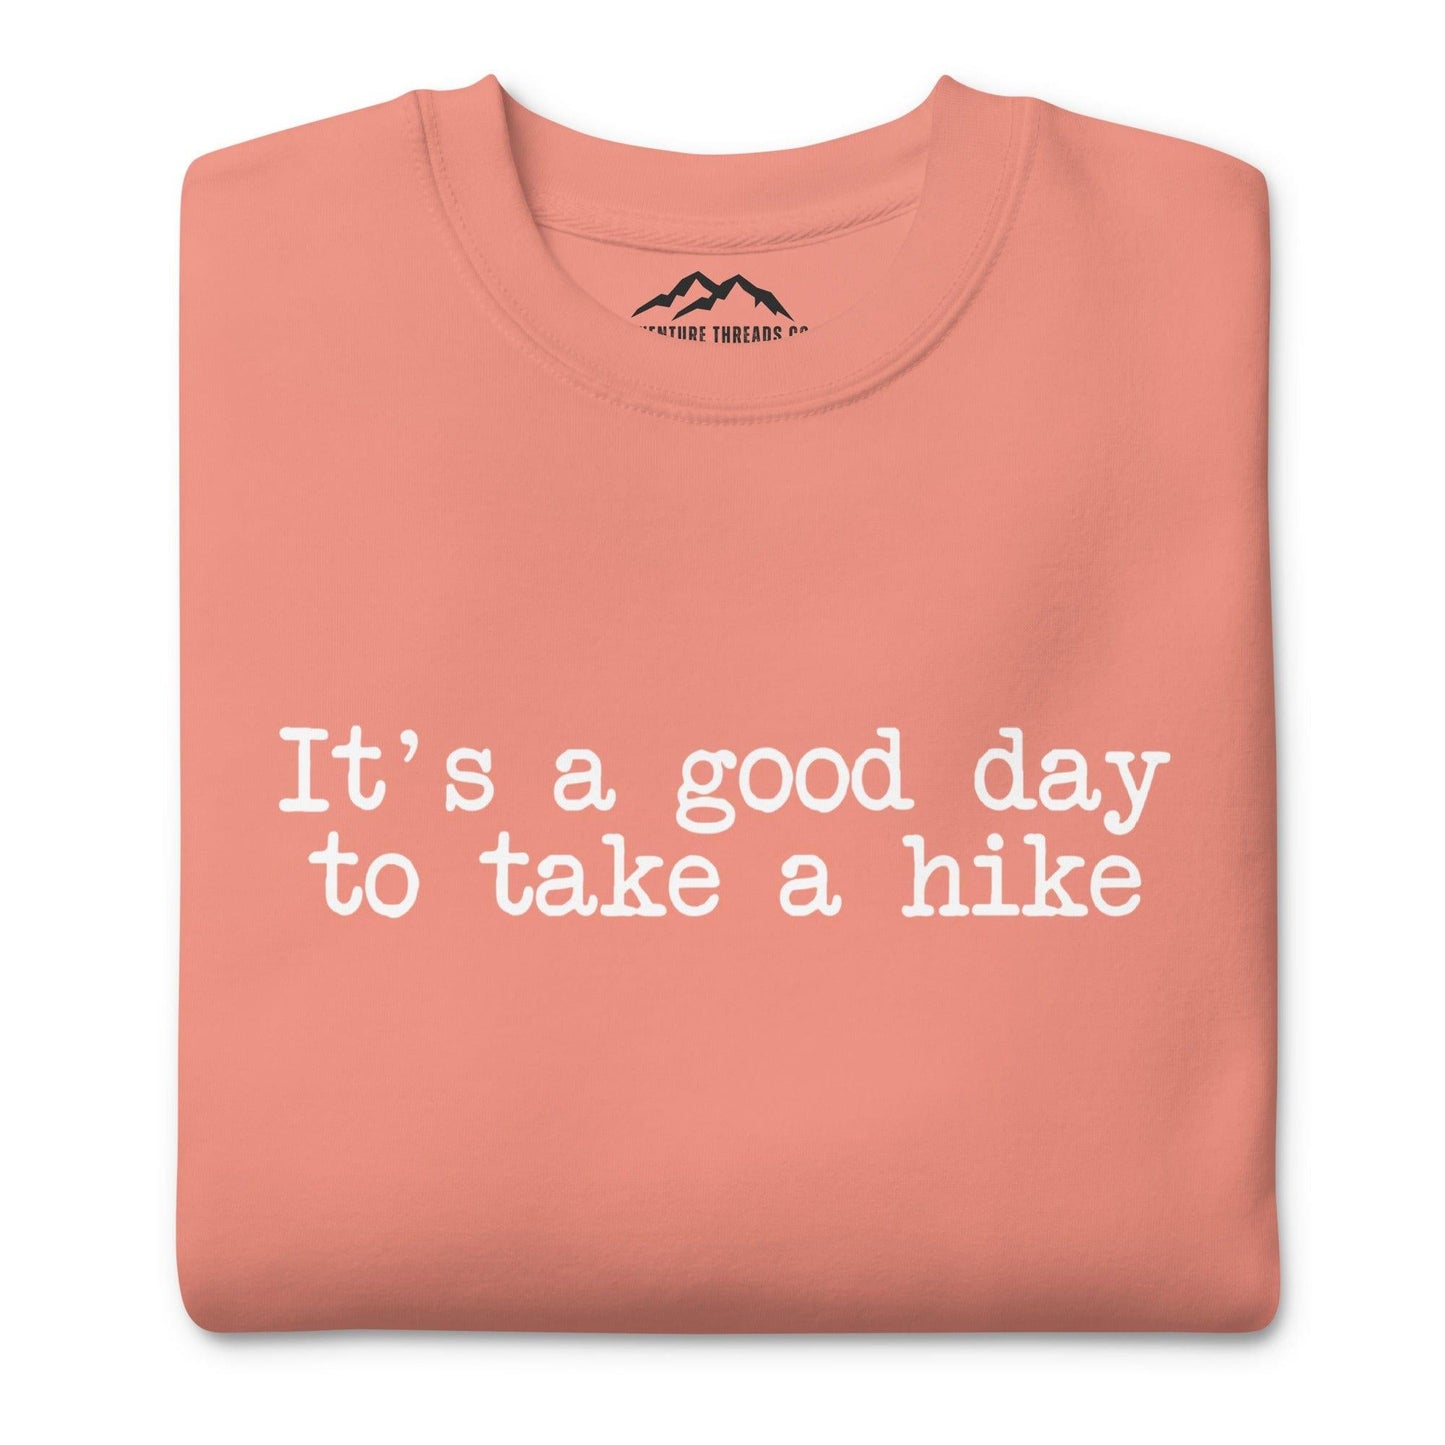 Good Day to Hike Premium Sweatshirt - Adventure Threads Company